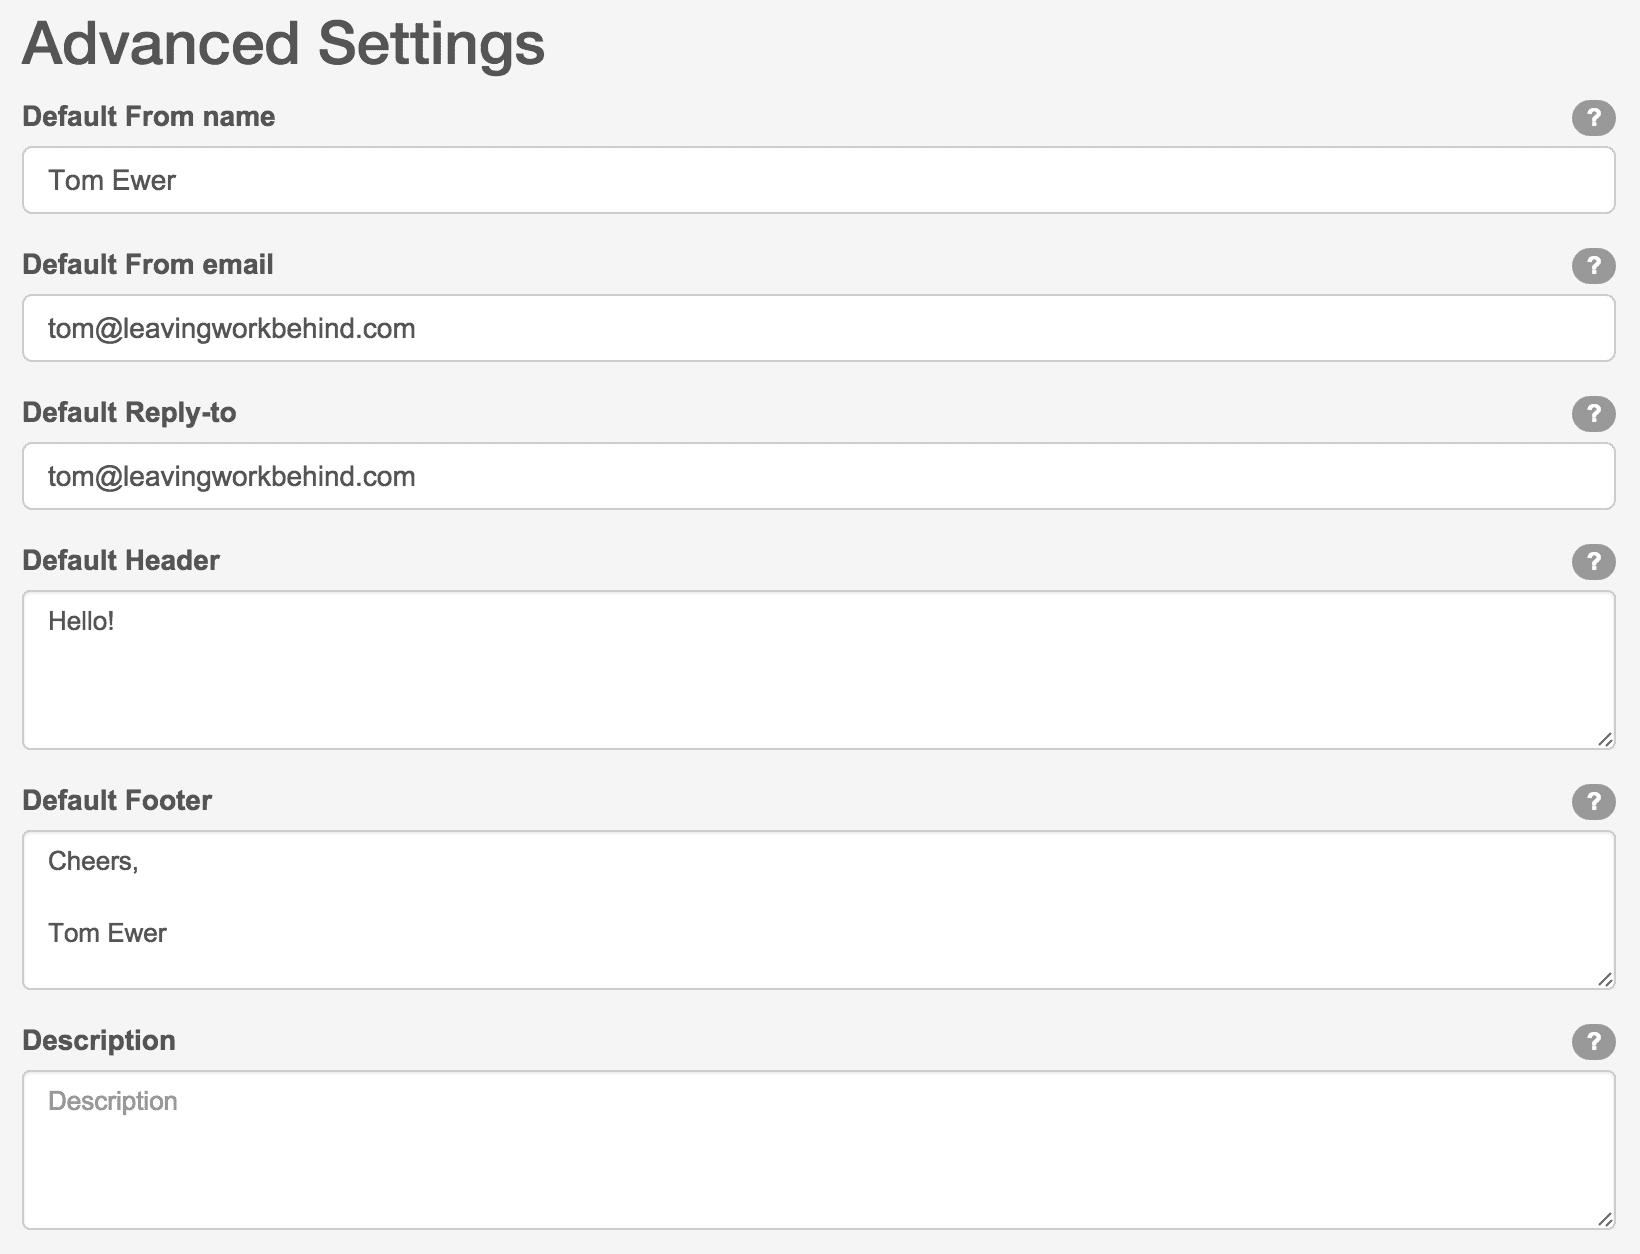 List settings